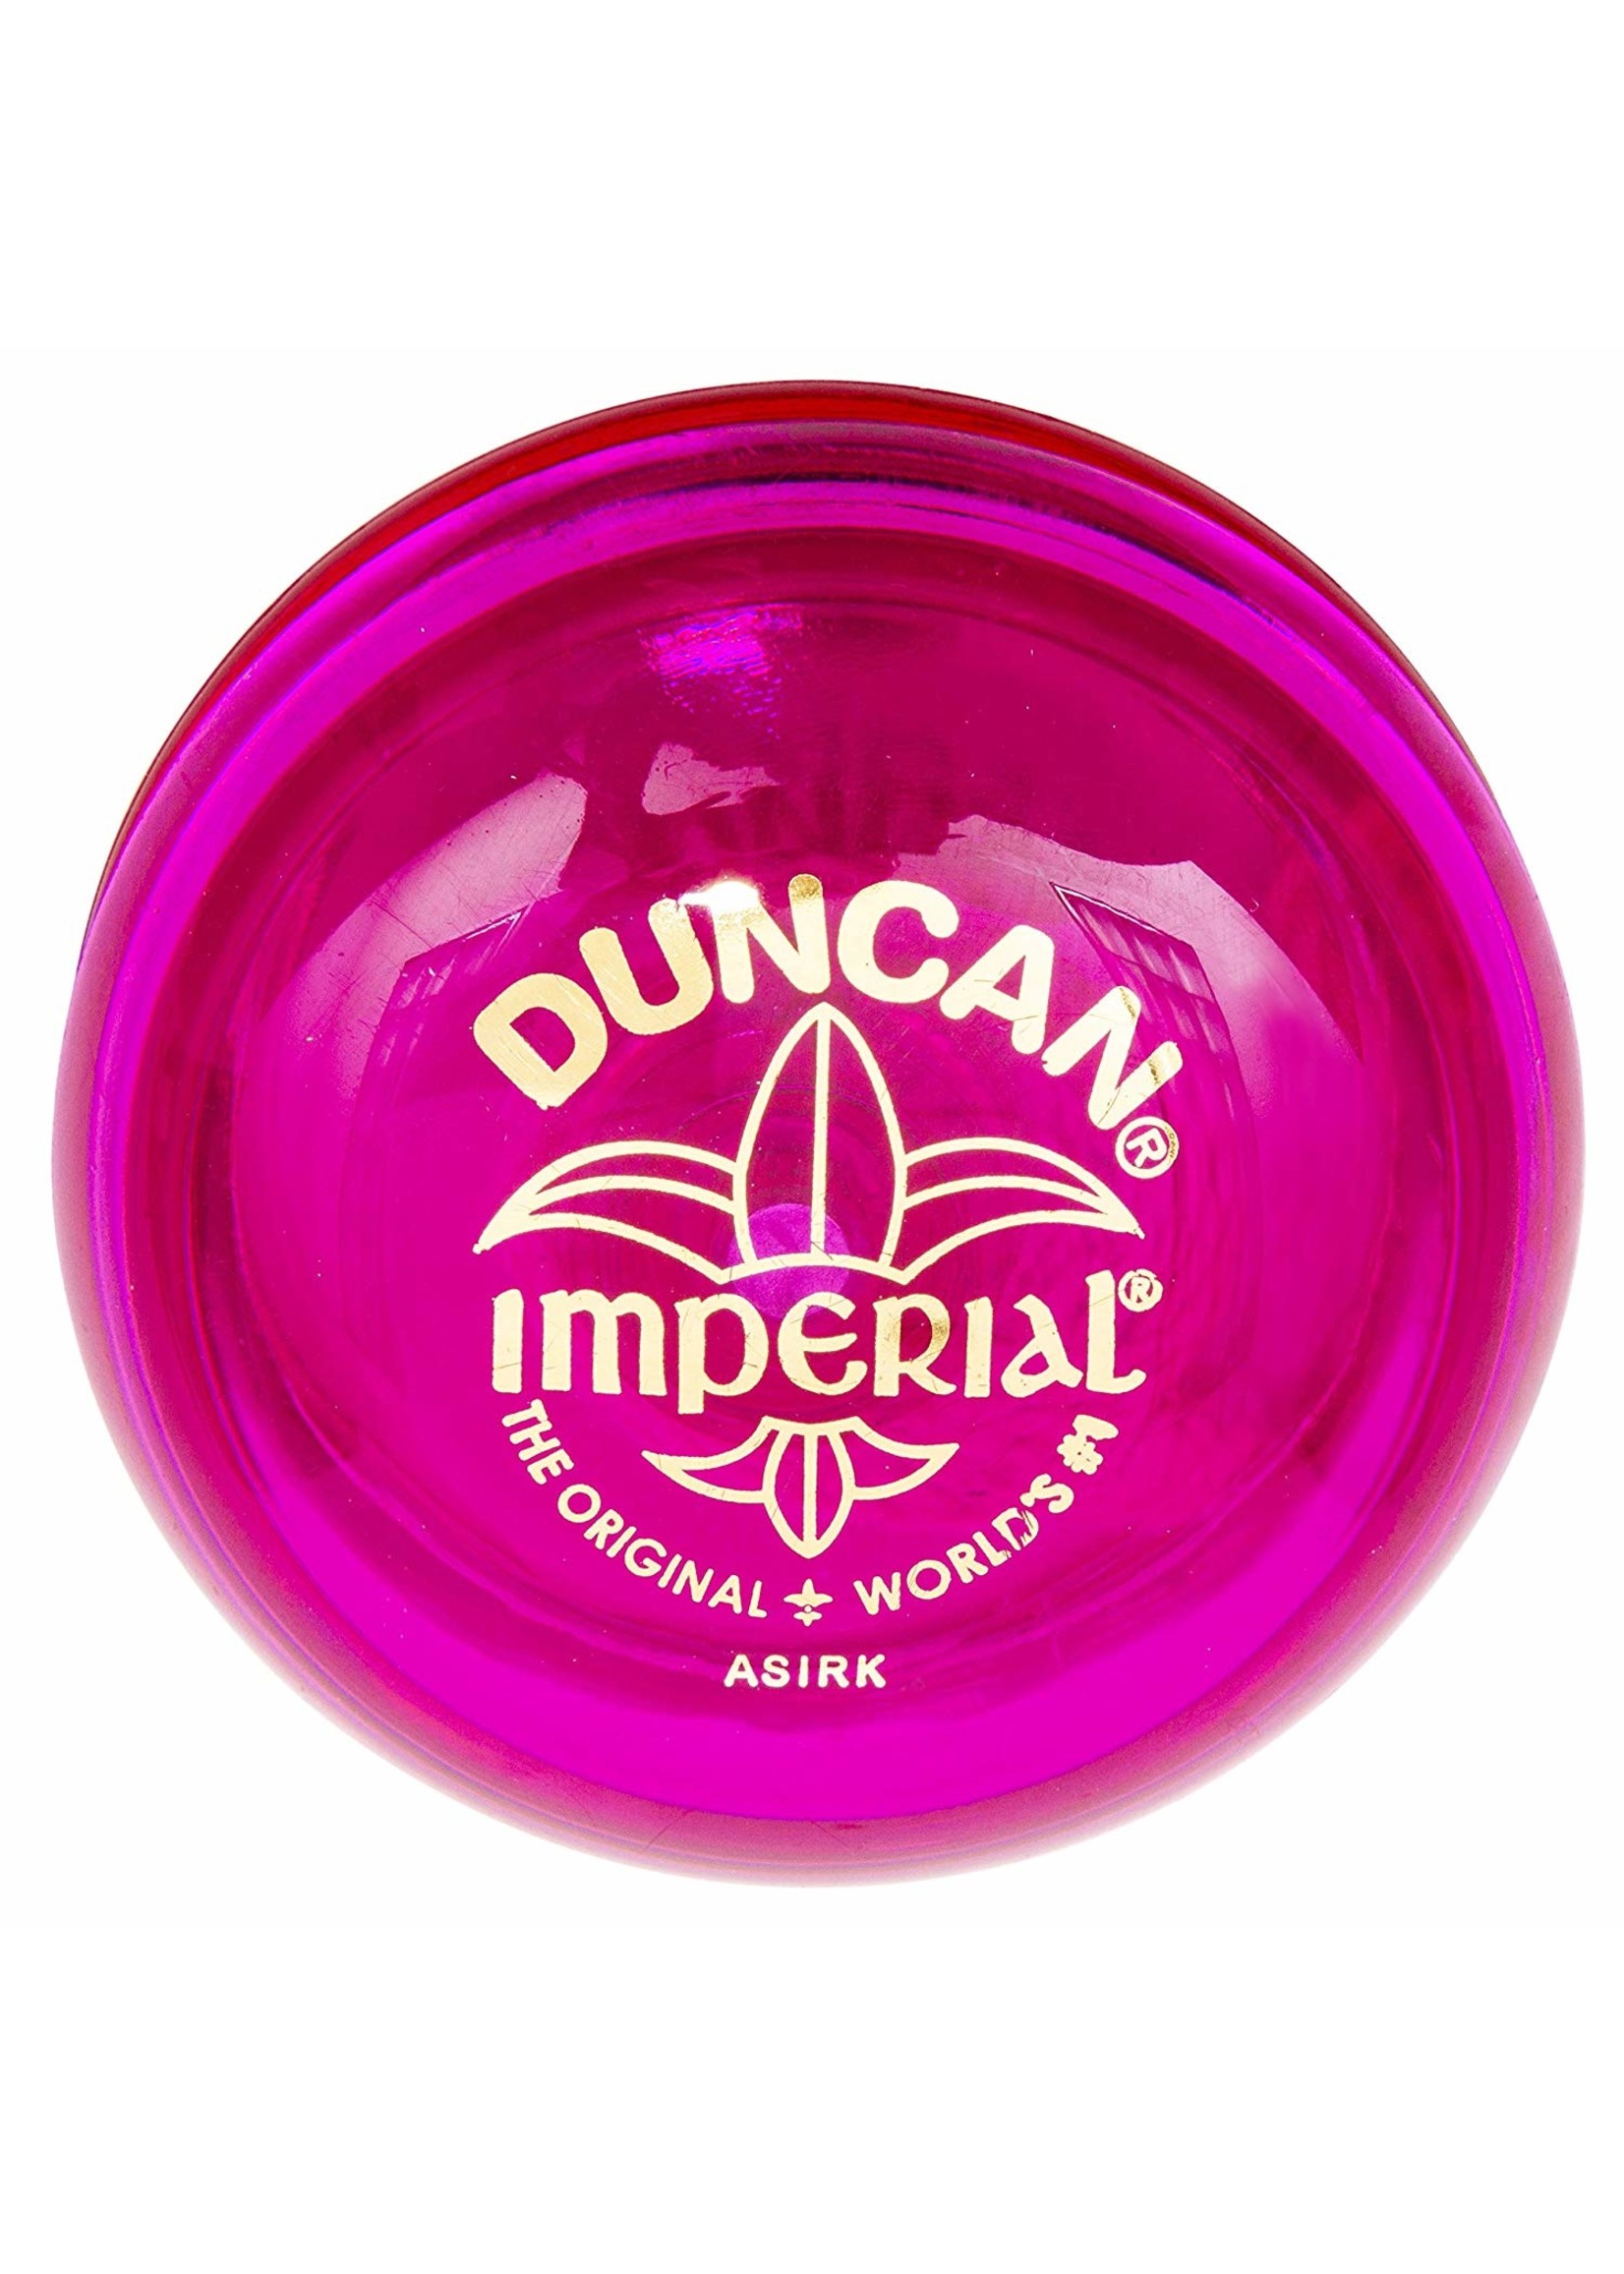 Duncan Imperial Yo-Yo (Assorted Colors)